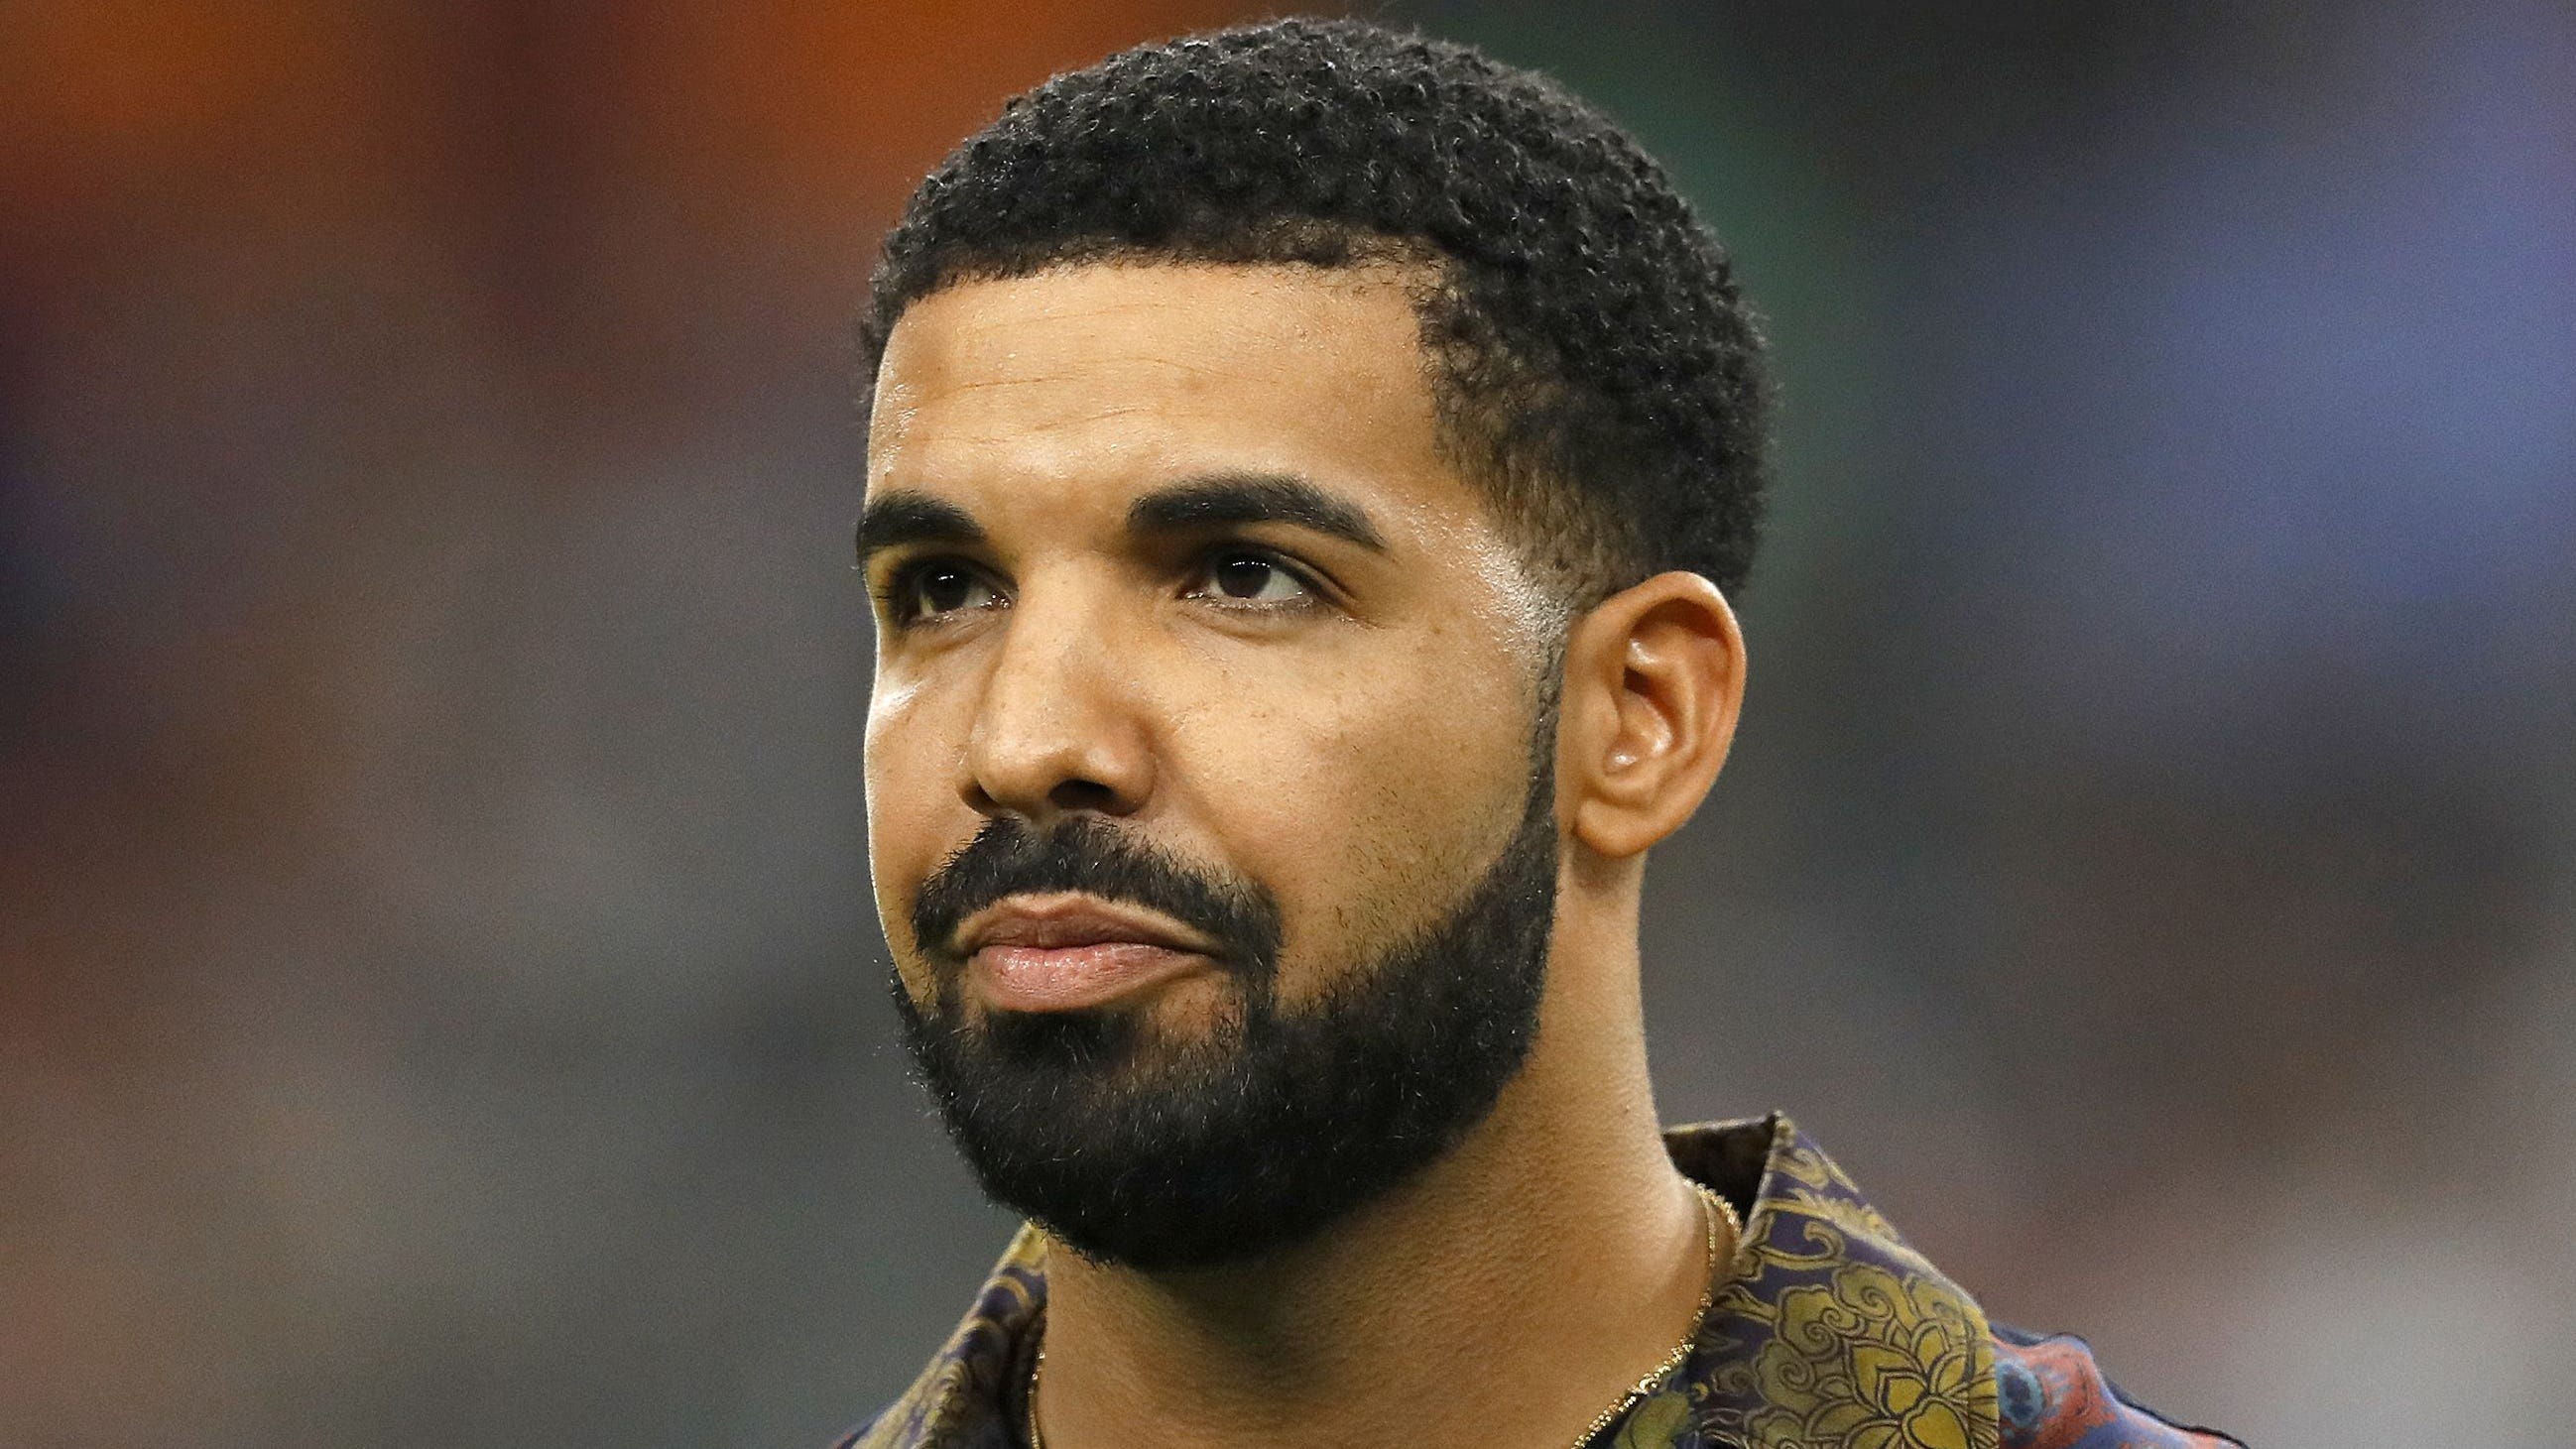 Drake seen kissing, fondling 17-year-old girl in 2010 concert video